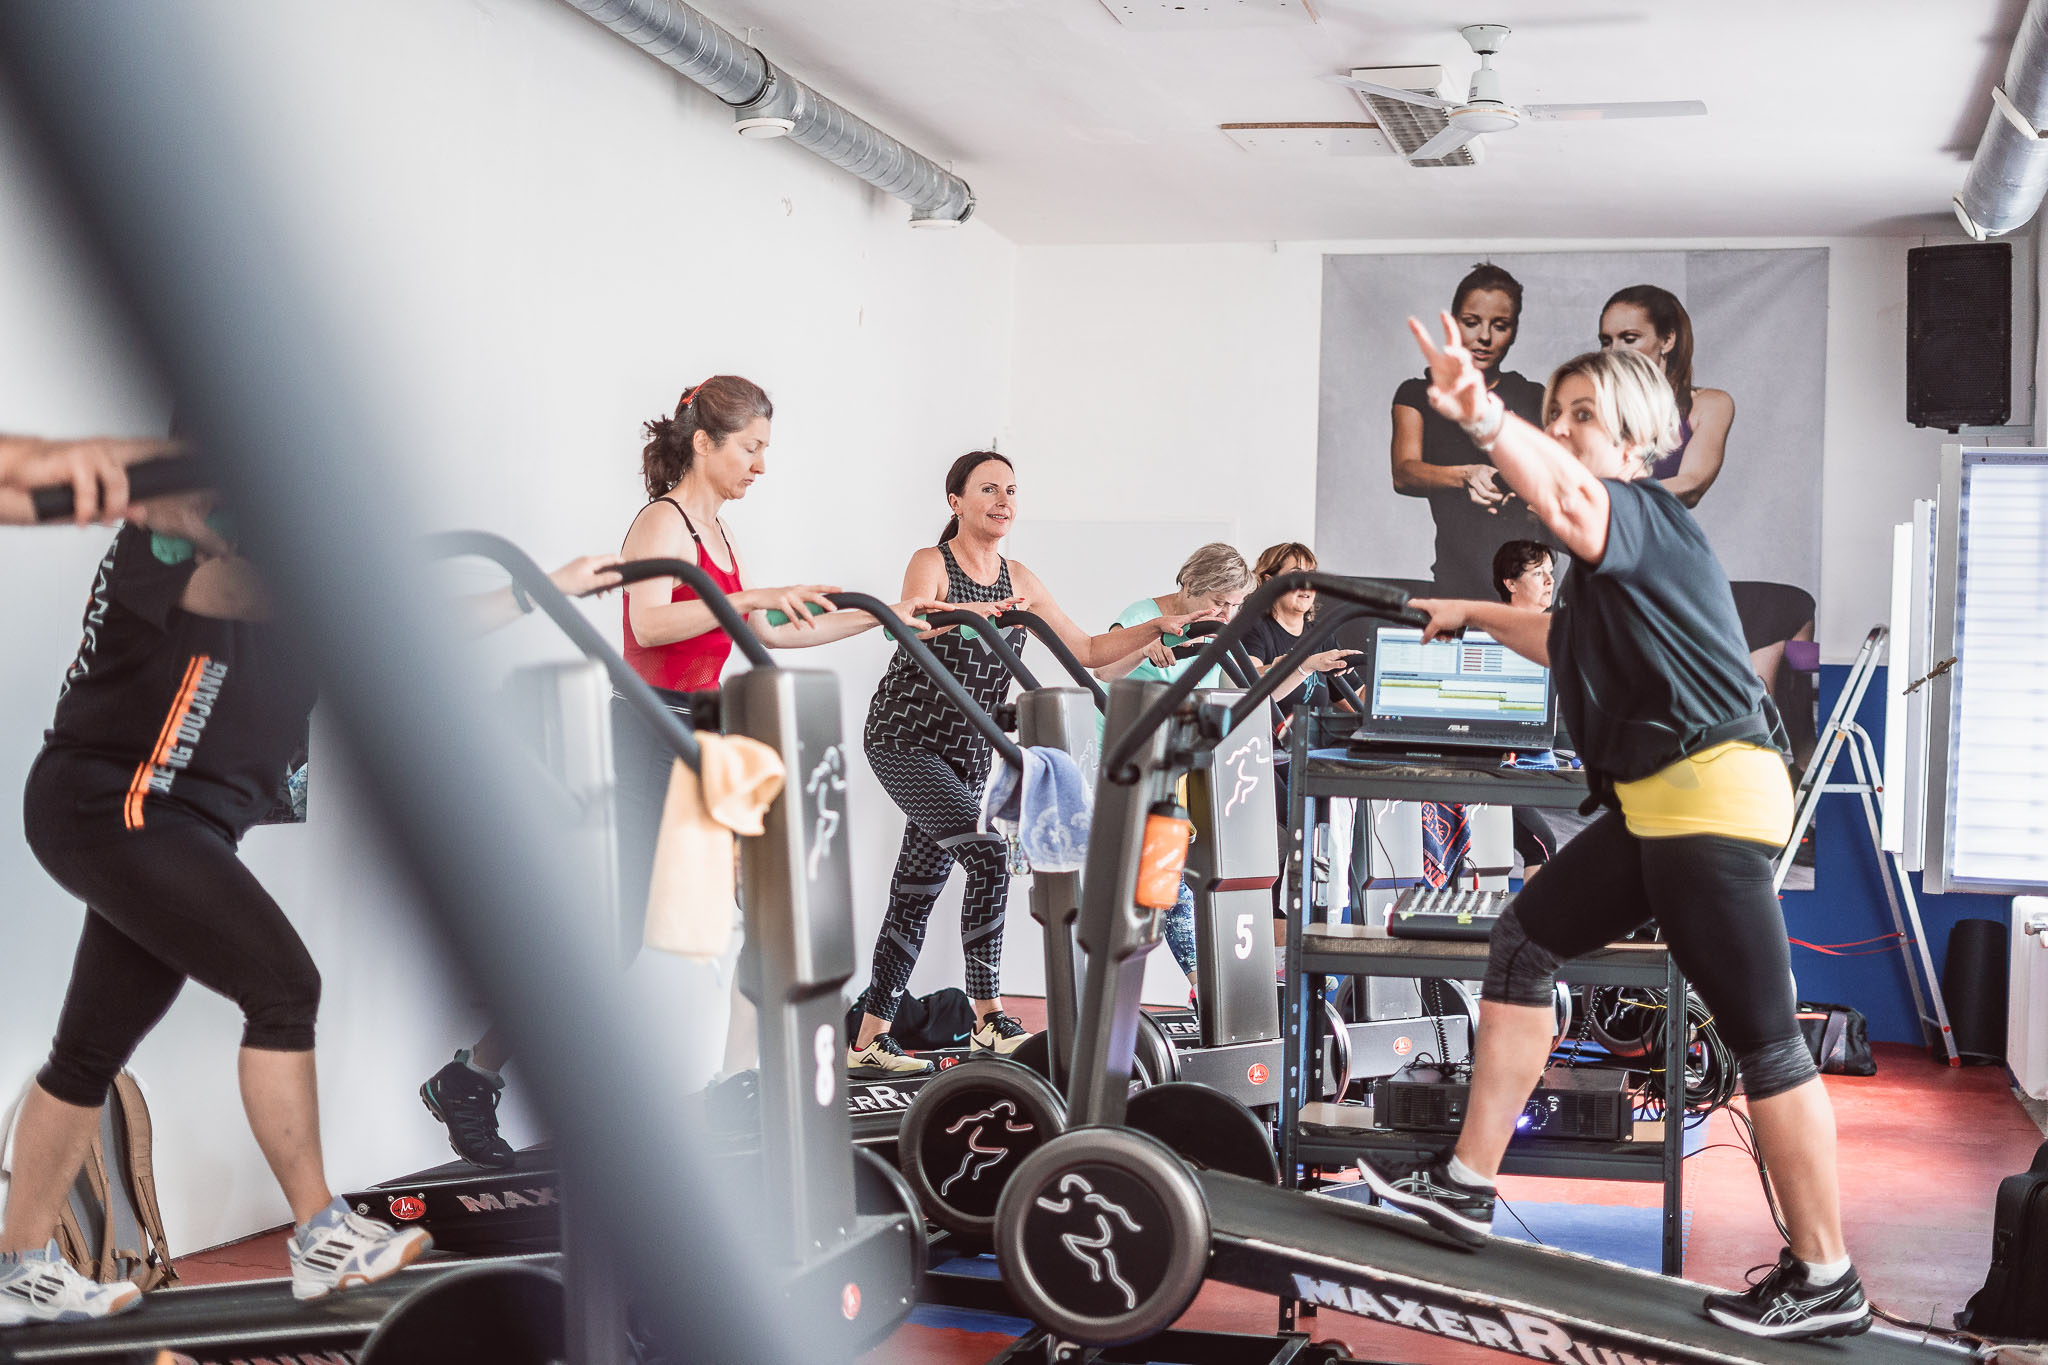 heat lekce teplice next studio fitness centrum